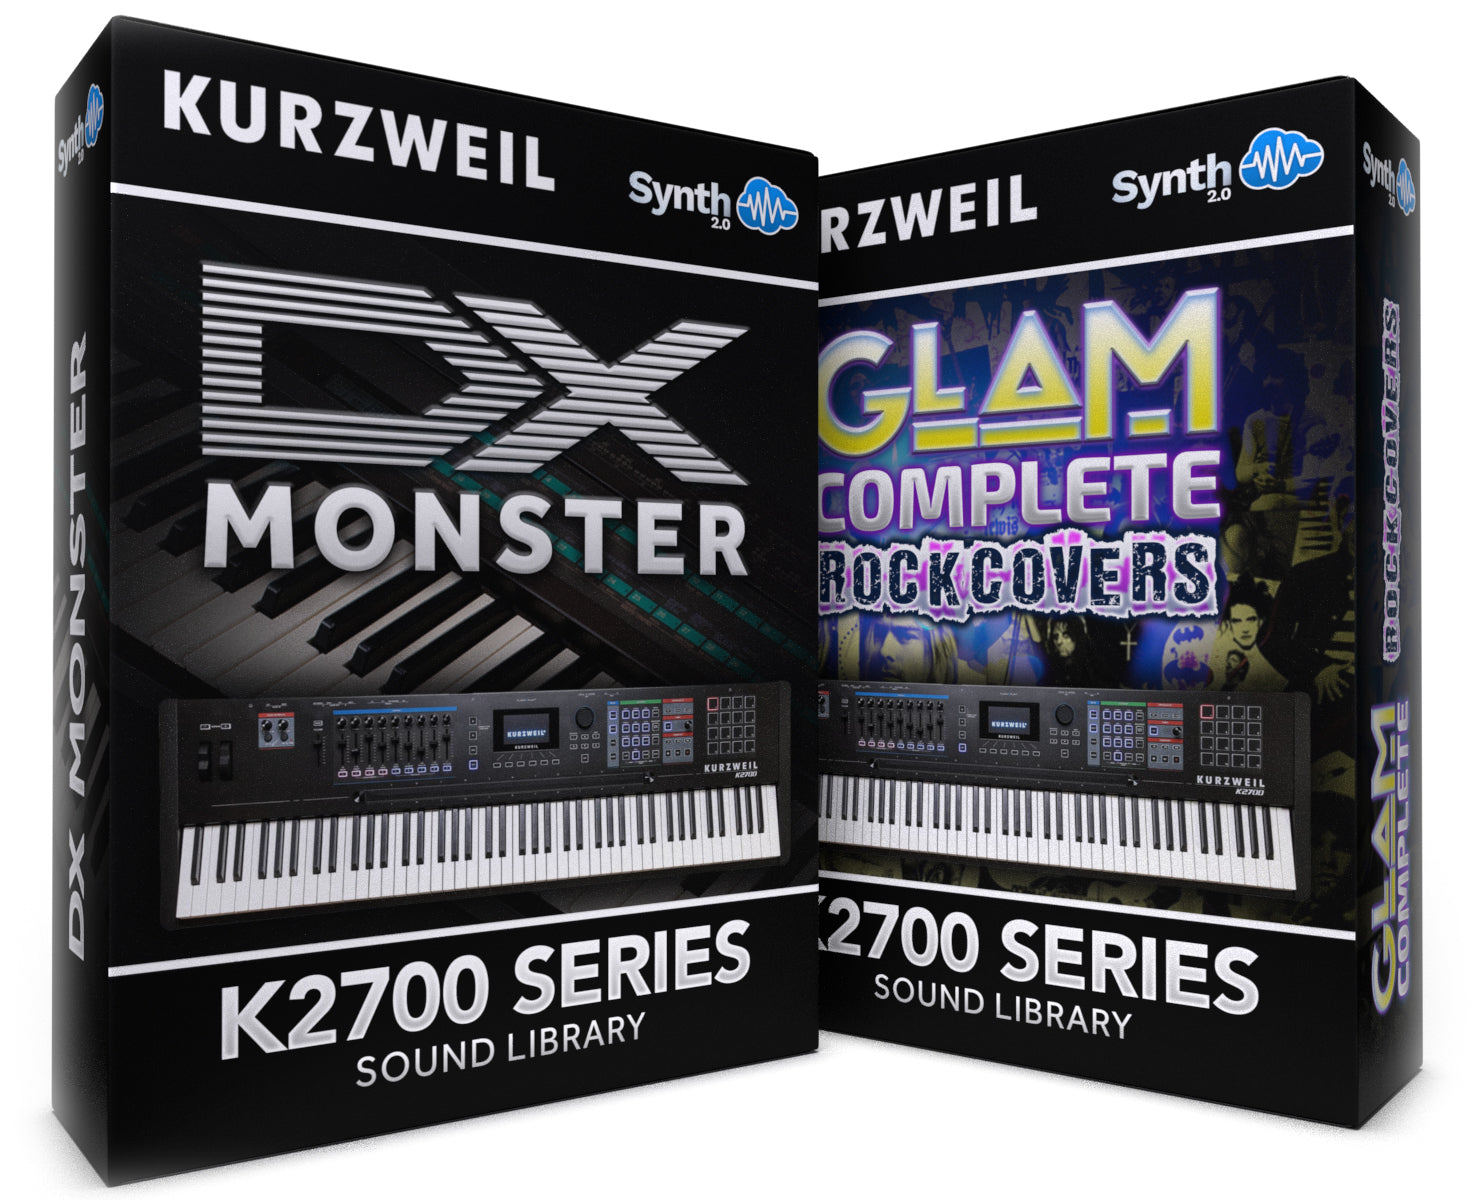 DRS035 - ( Bundle ) - DX Monster + Glam Complete Rock Covers - Kurzweil K2700